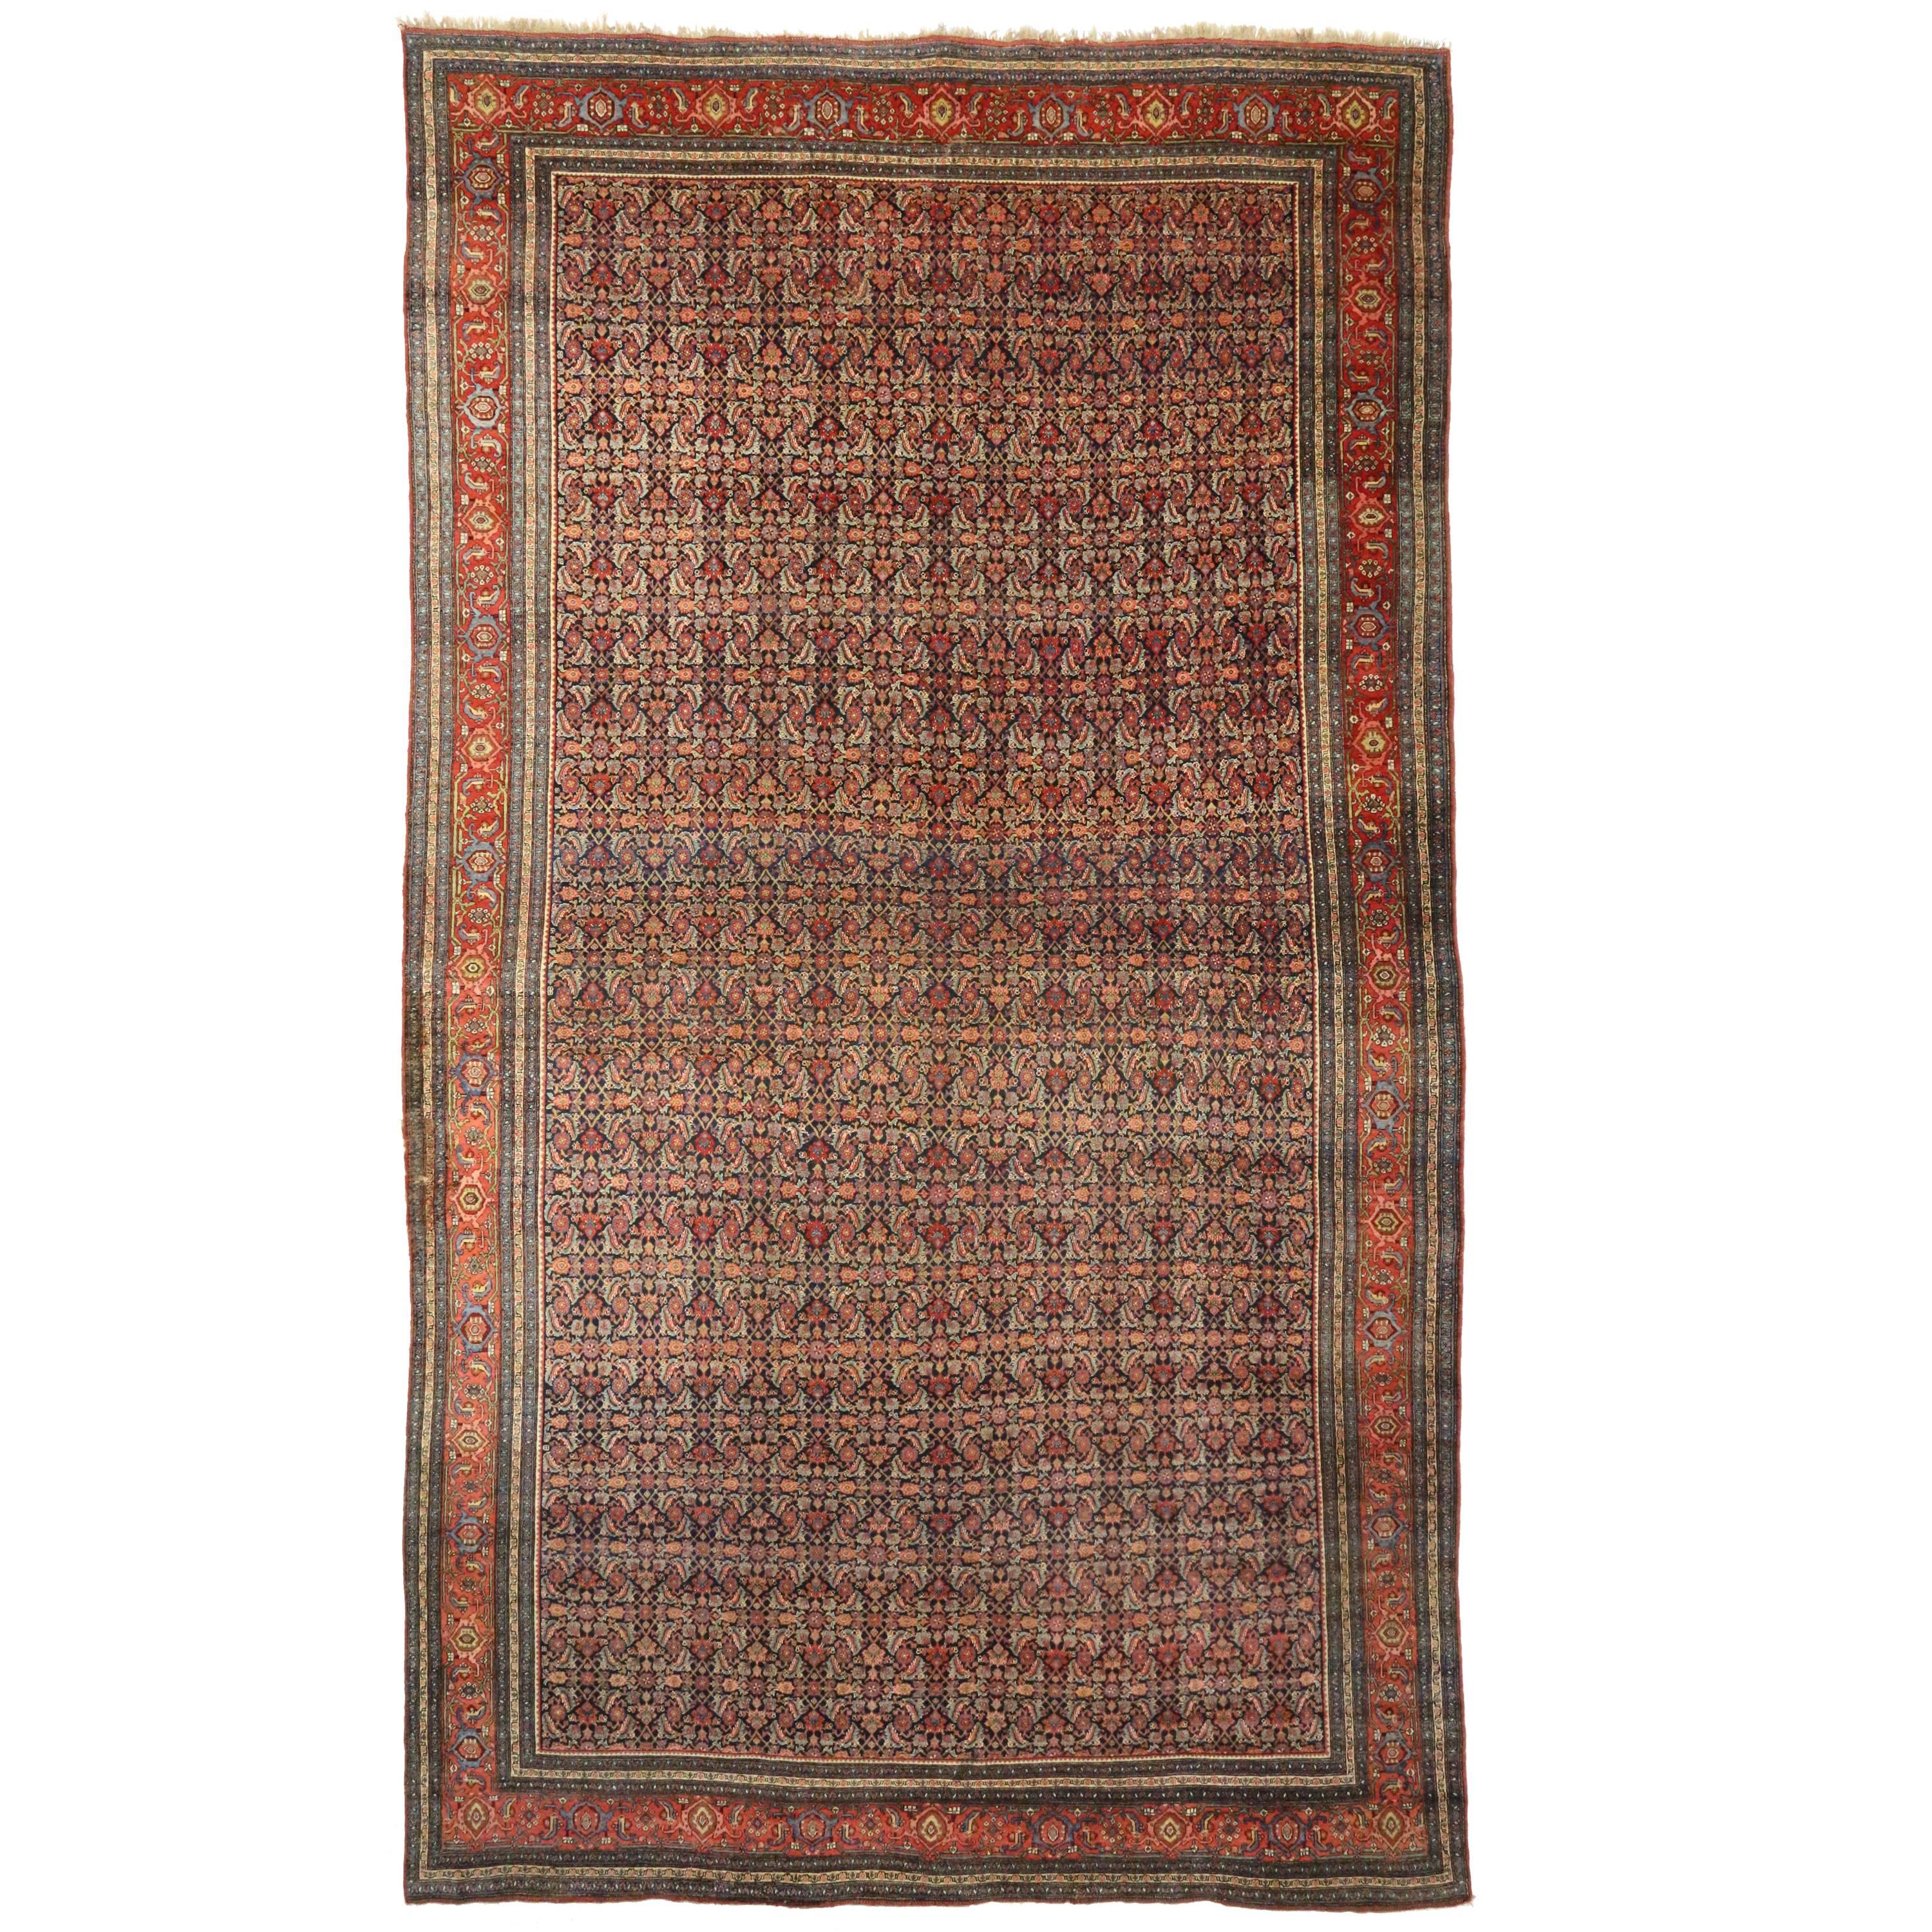 1880s Oversized Antique Persian Bijar Rug, Nostalgic Charm Meets Timeless Style